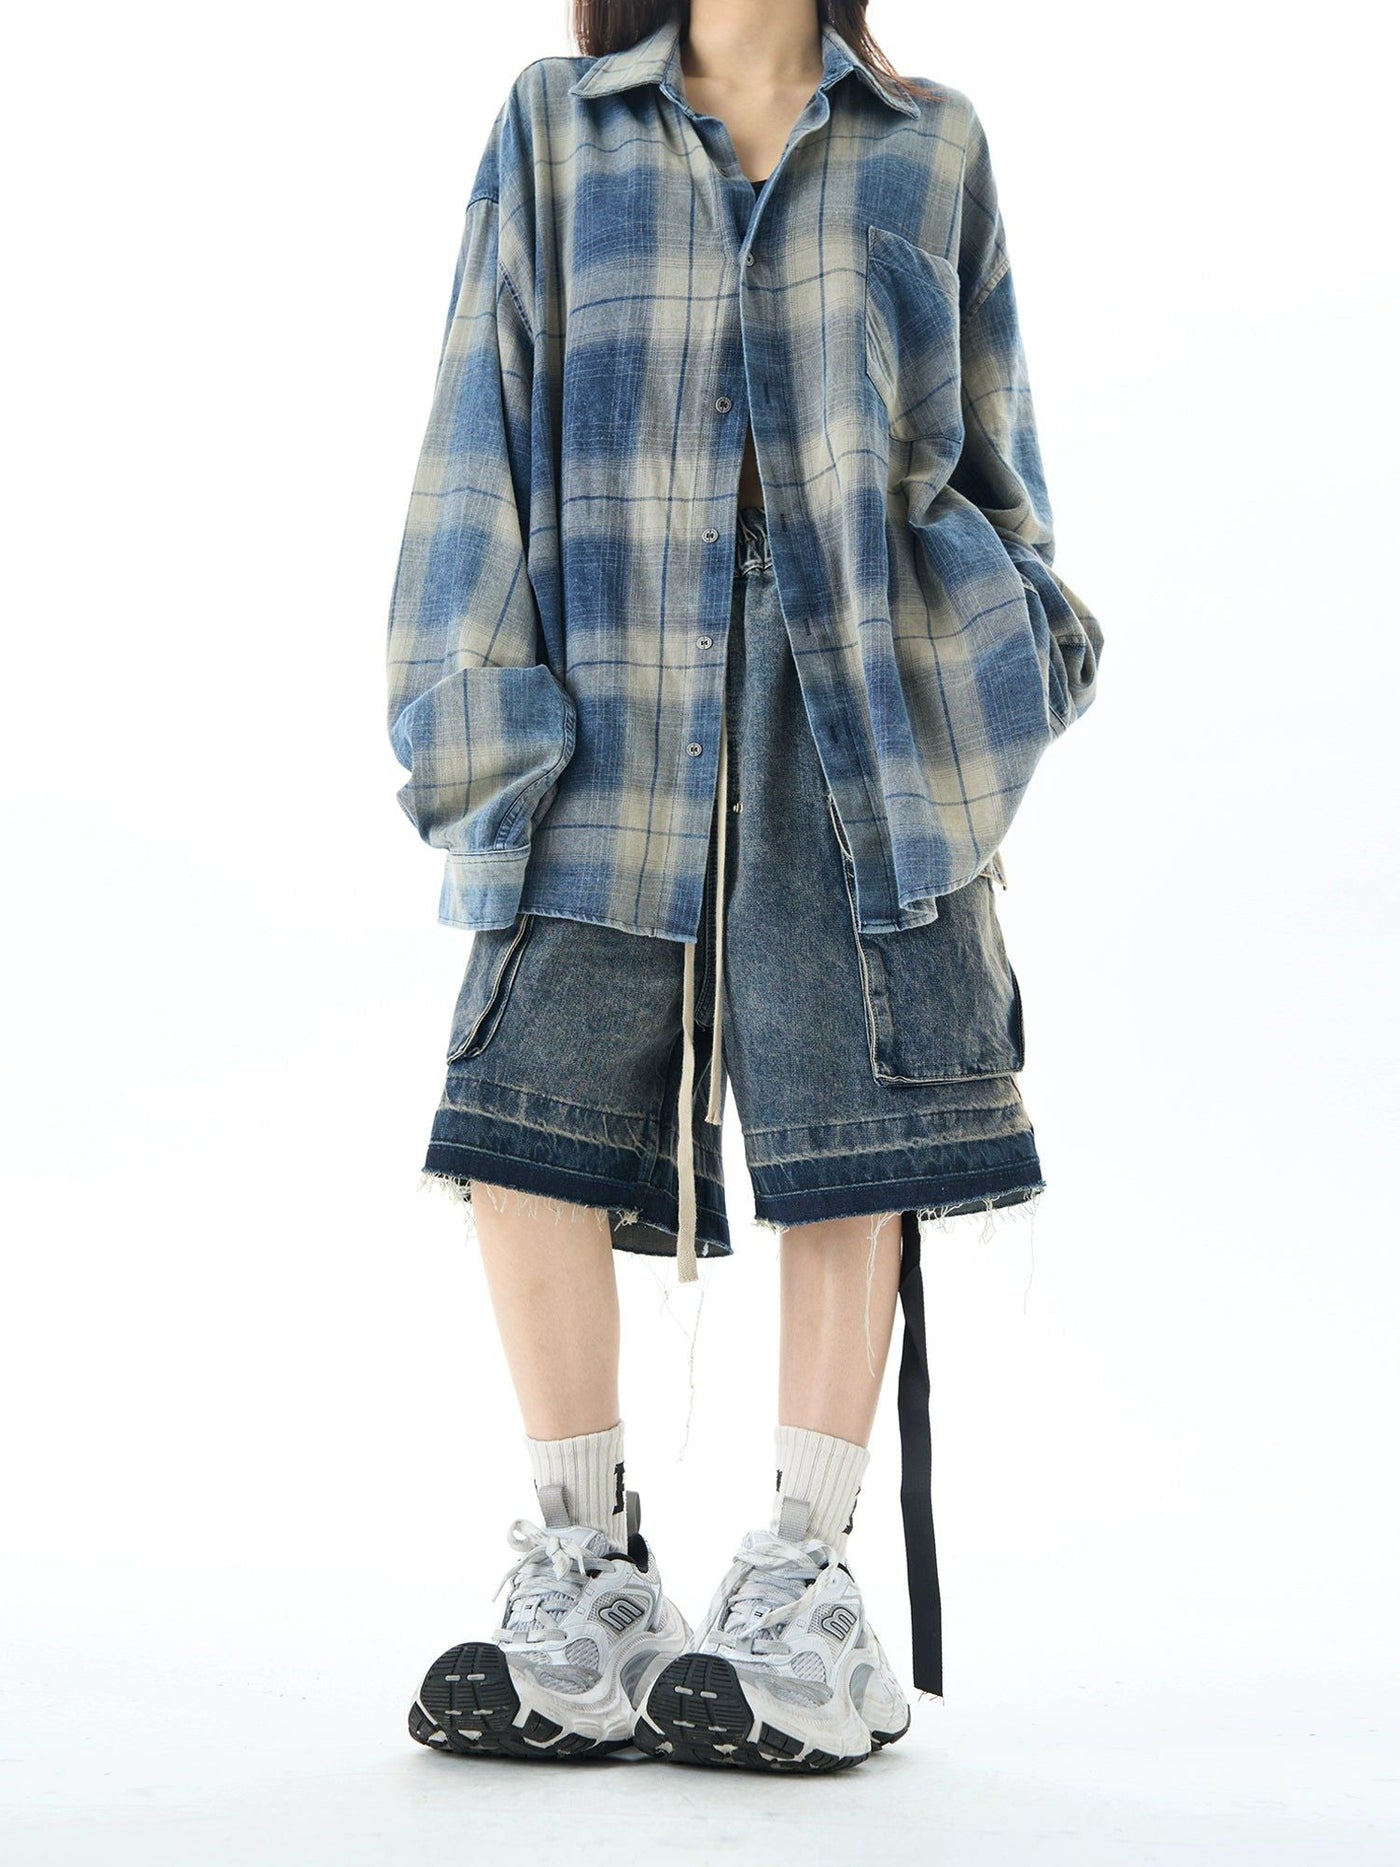 Gradient Raw Edge Denim Shorts Korean Street Fashion Shorts By MaxDstr Shop Online at OH Vault